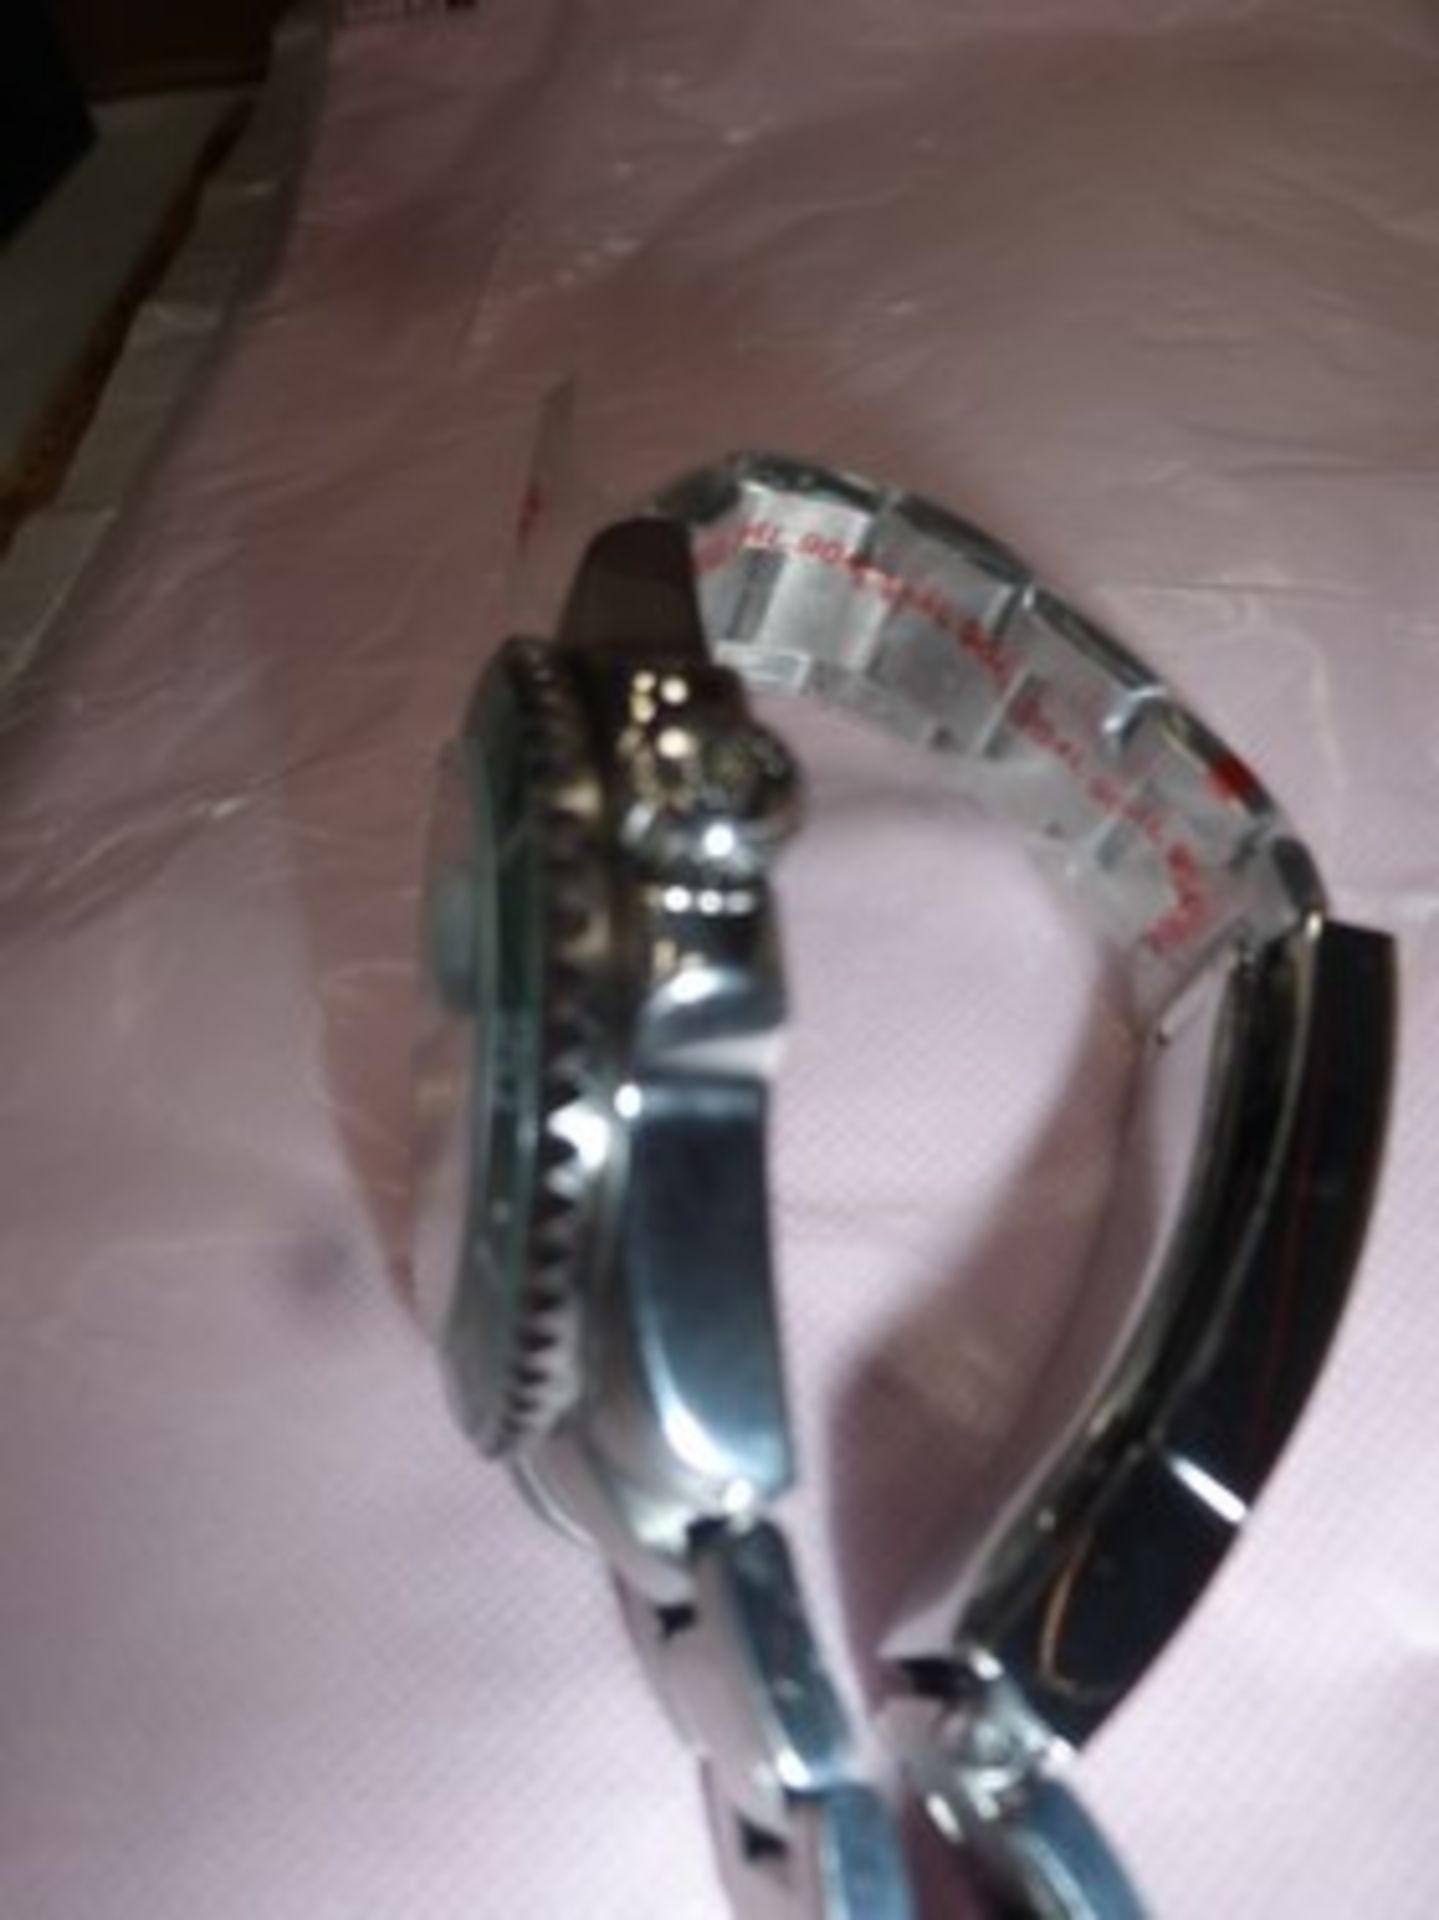 1 x Replica Rolex Submariner watch (no box) - new (C12B) - Image 2 of 3